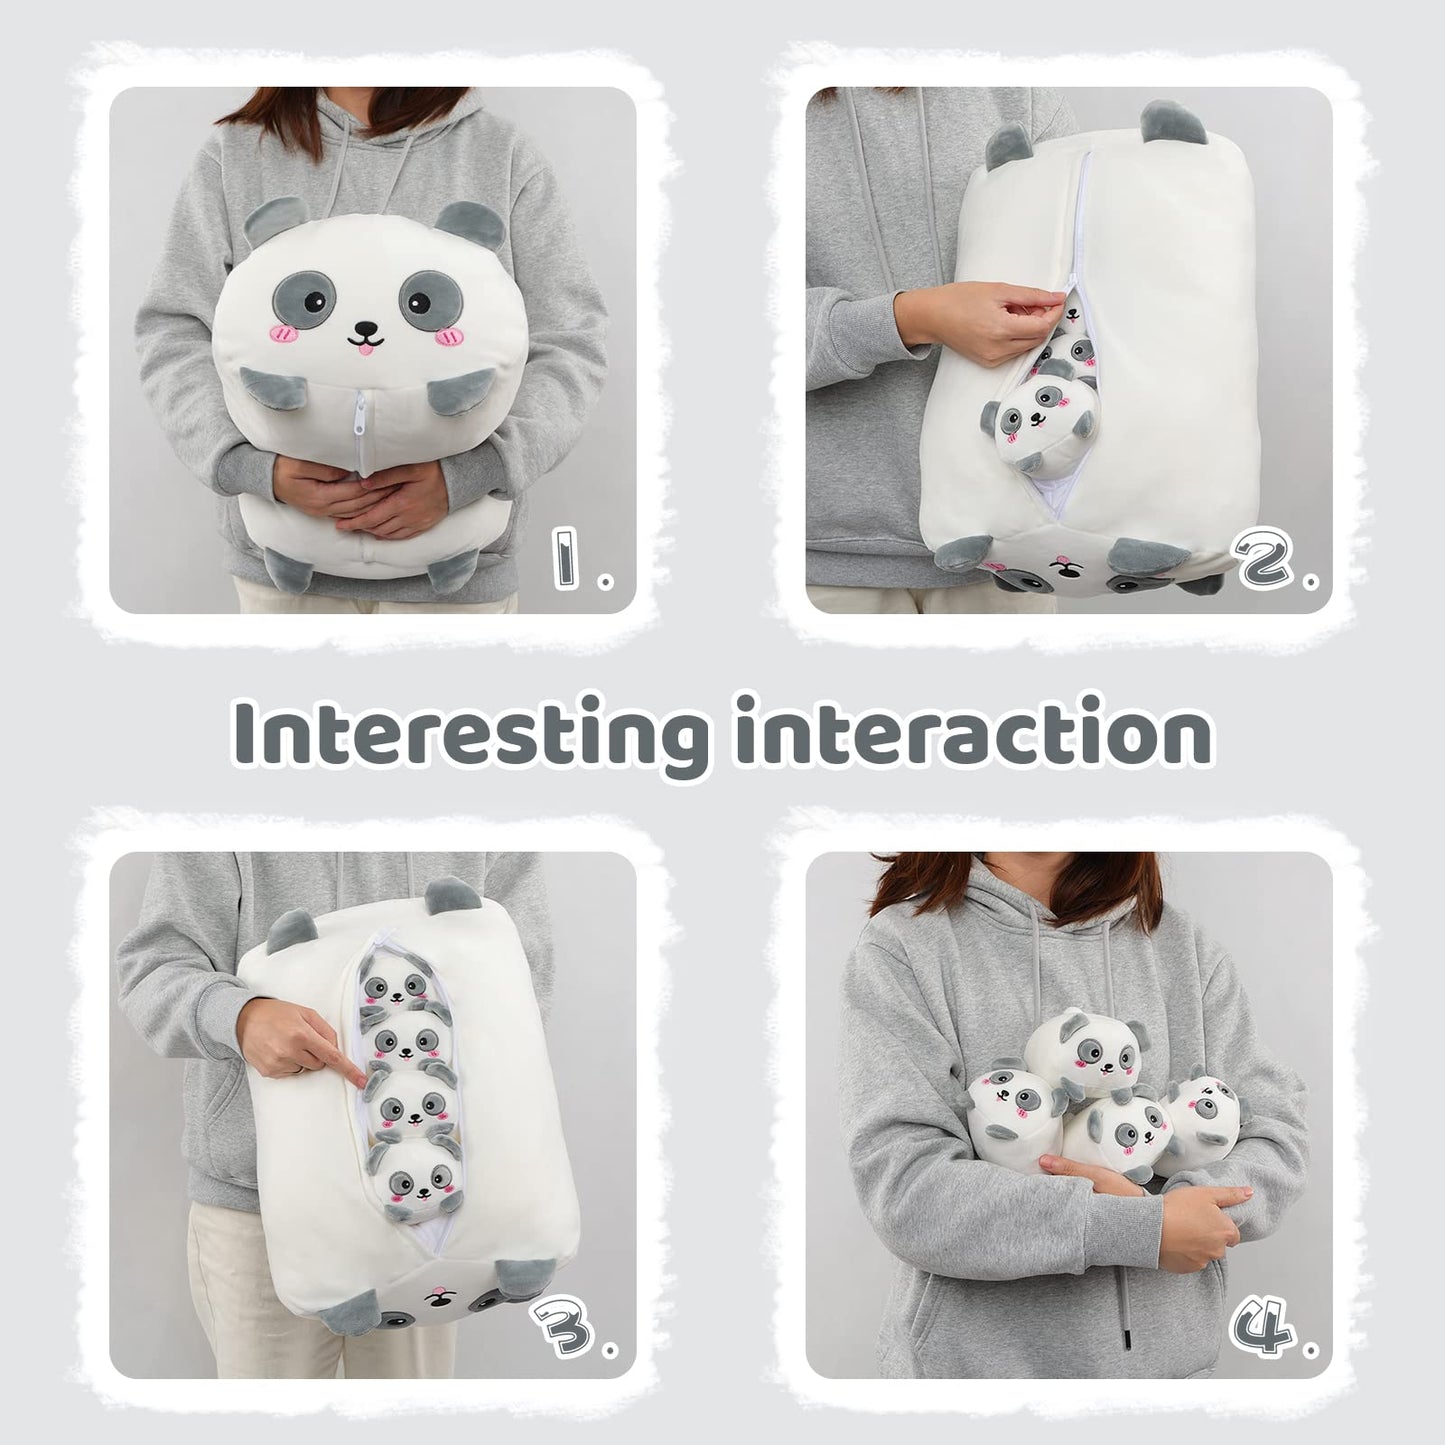 Cute Panda Mom Plush Pillow with 4 Red Panda Stuffed Animals, Super Soft Kawaii Fat Cat Fat Cat Hug Toy Bedding Gift